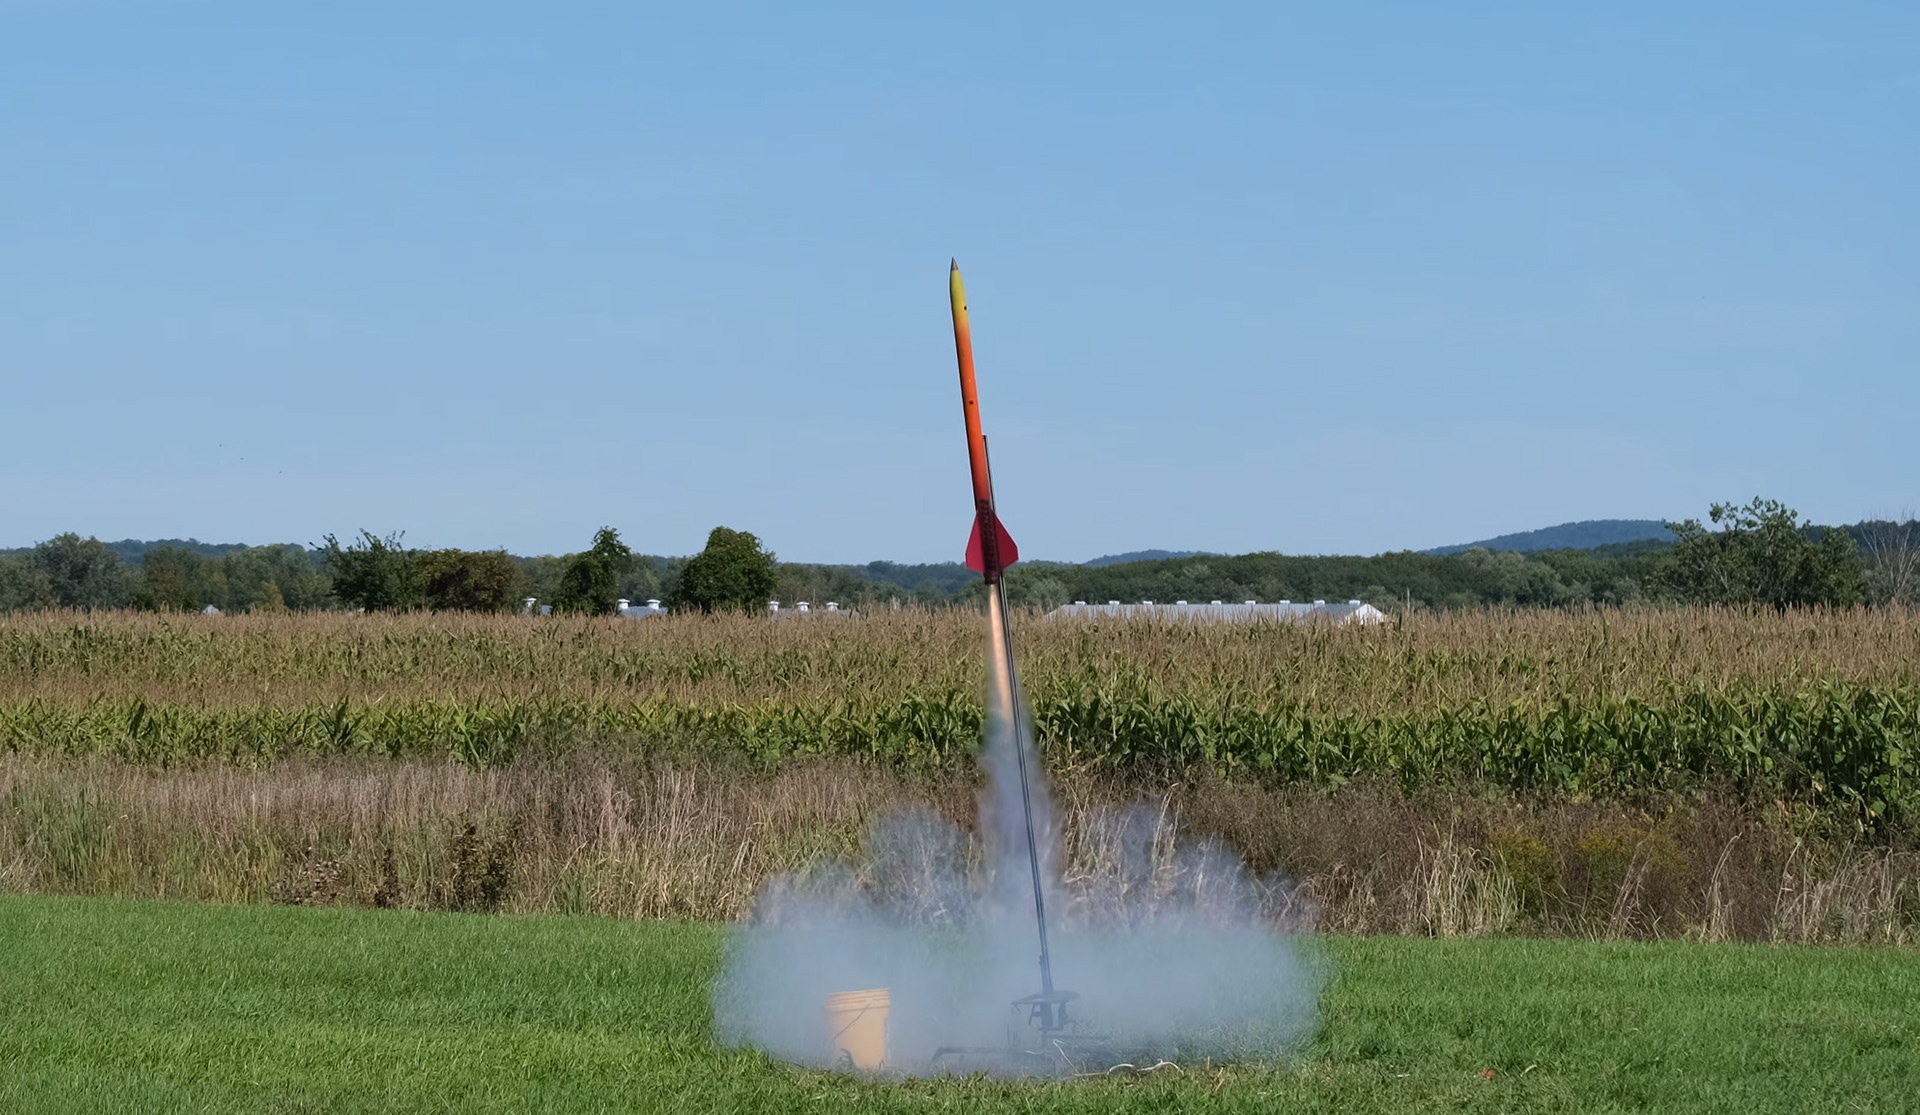 "Beanboozler" High-Power Model Rocket (AerospaceNU)